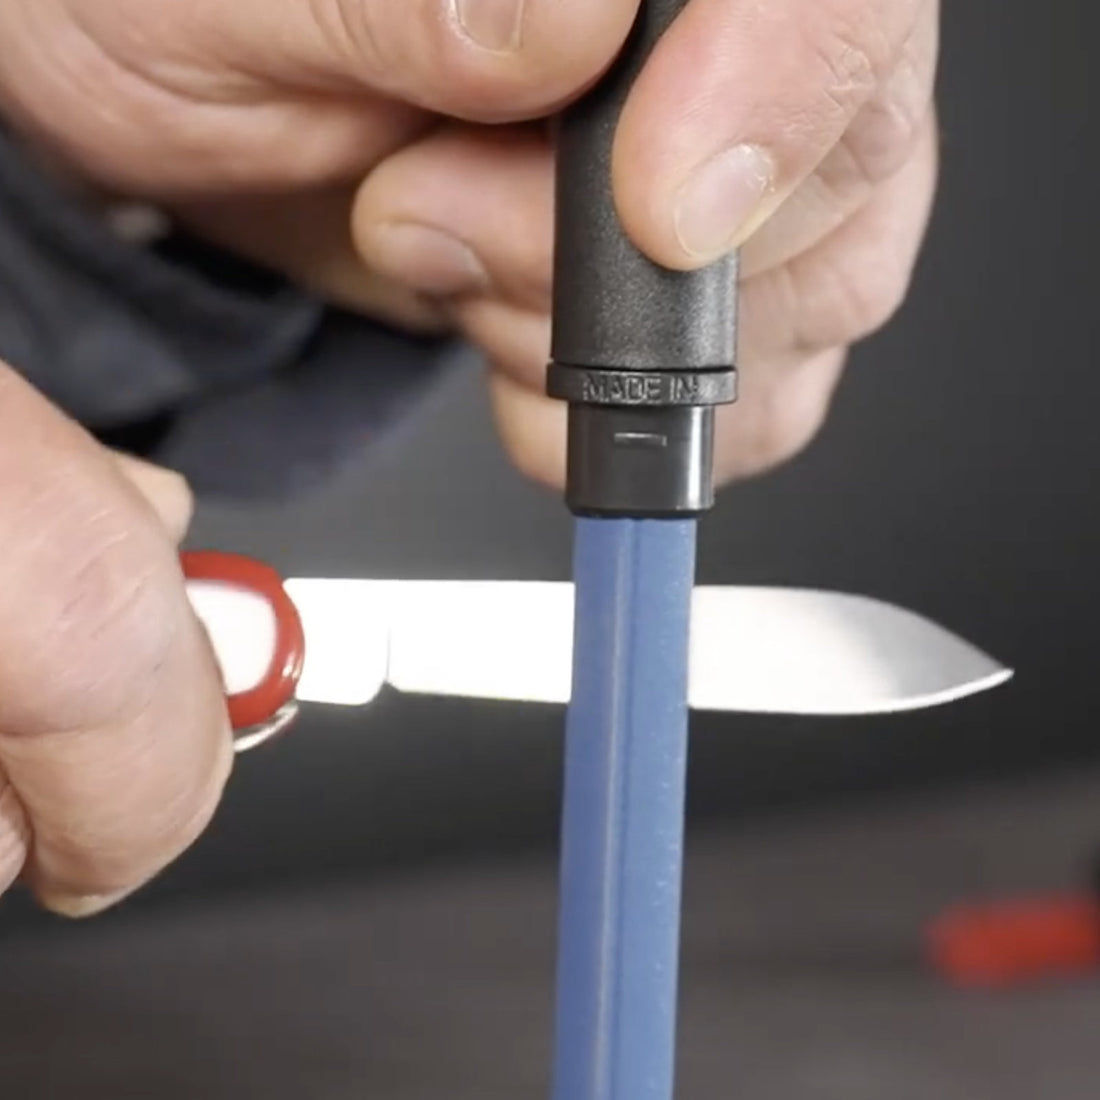 How To Hone & Sharpen Knives With The V-Sharpener